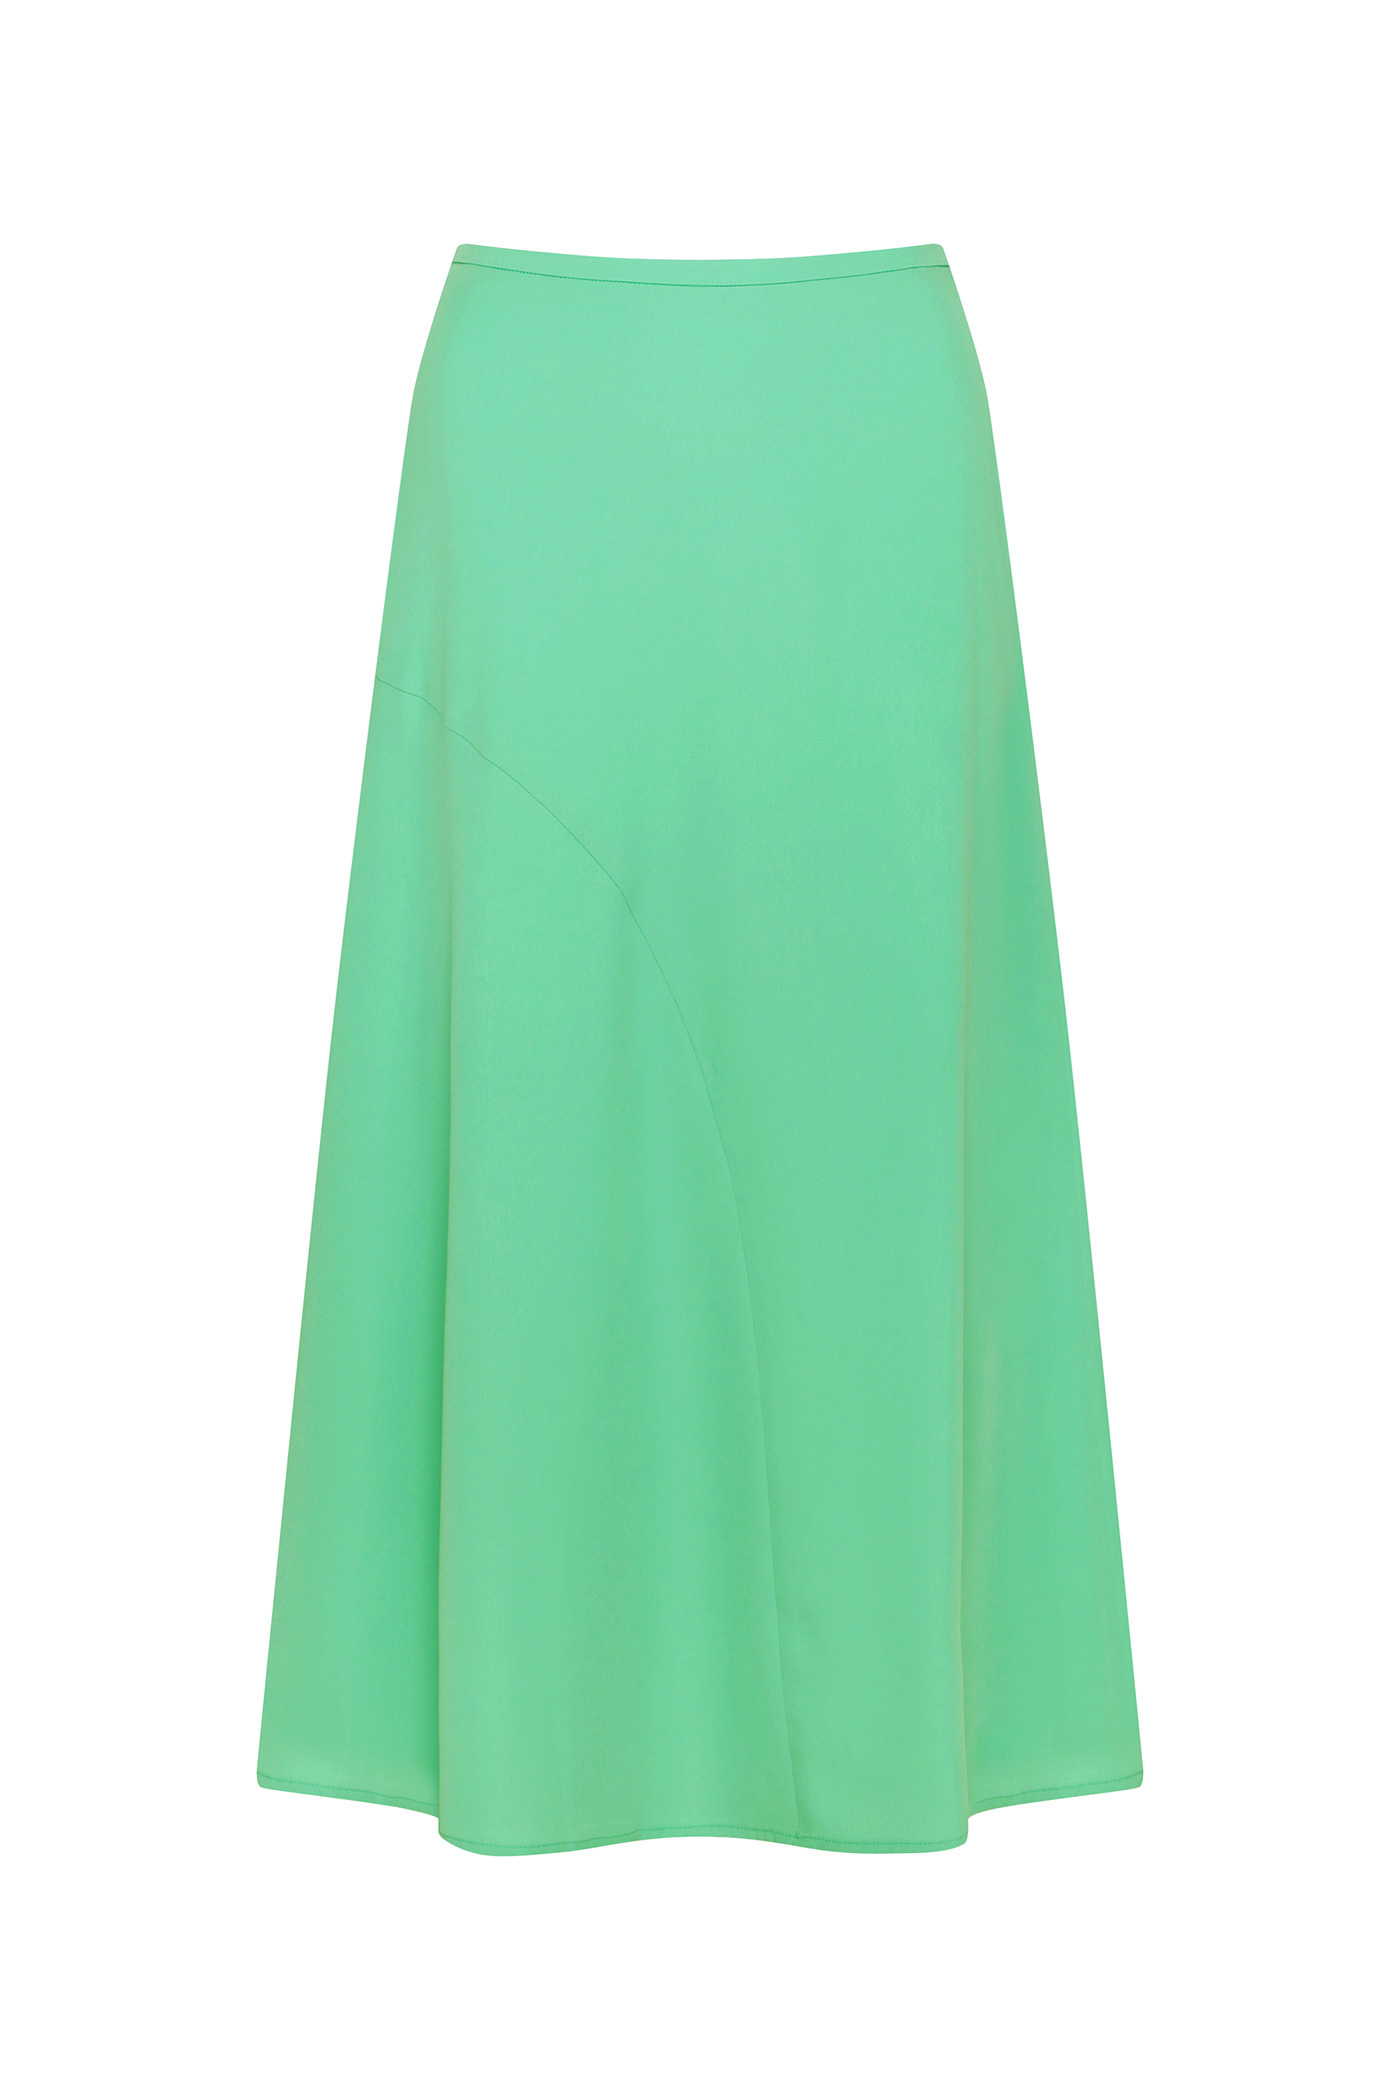 Vivid Skirt-Green